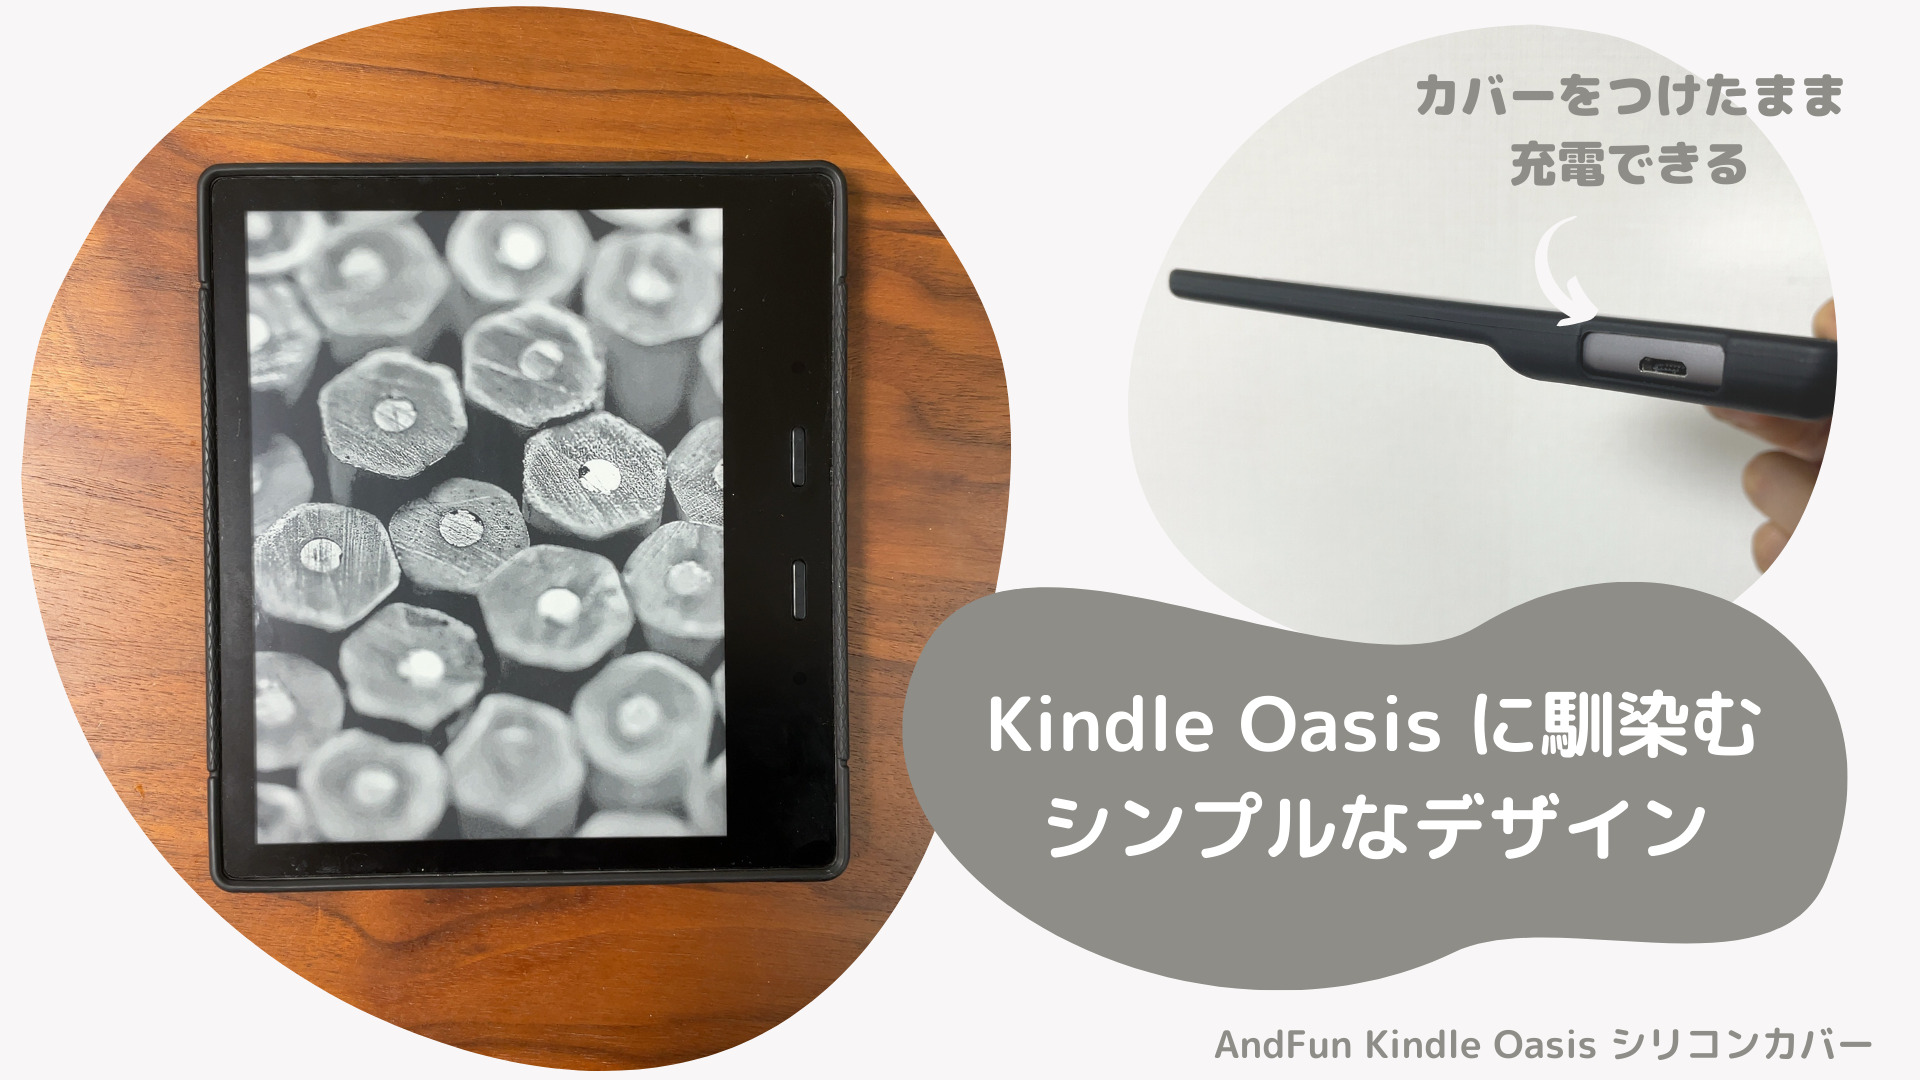 Kindle oasis 本体 第10世代 Wi-Fi 8GB 広告なし+inforsante.fr